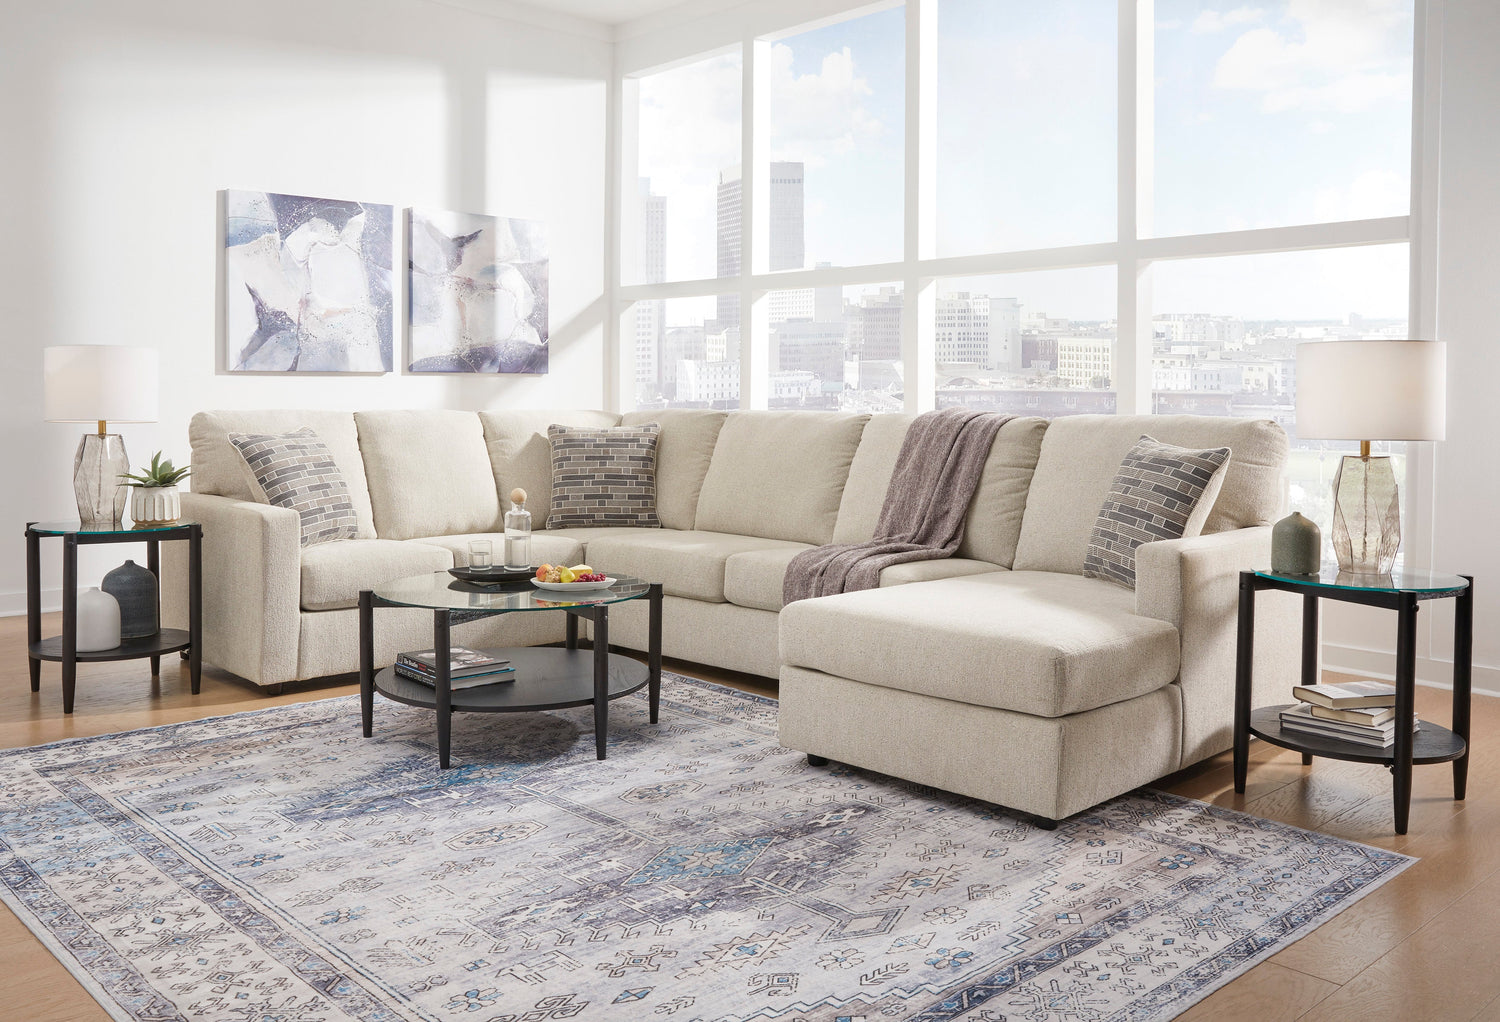 Furniture Fix - Set of 18 - Support for Sagging Sofa